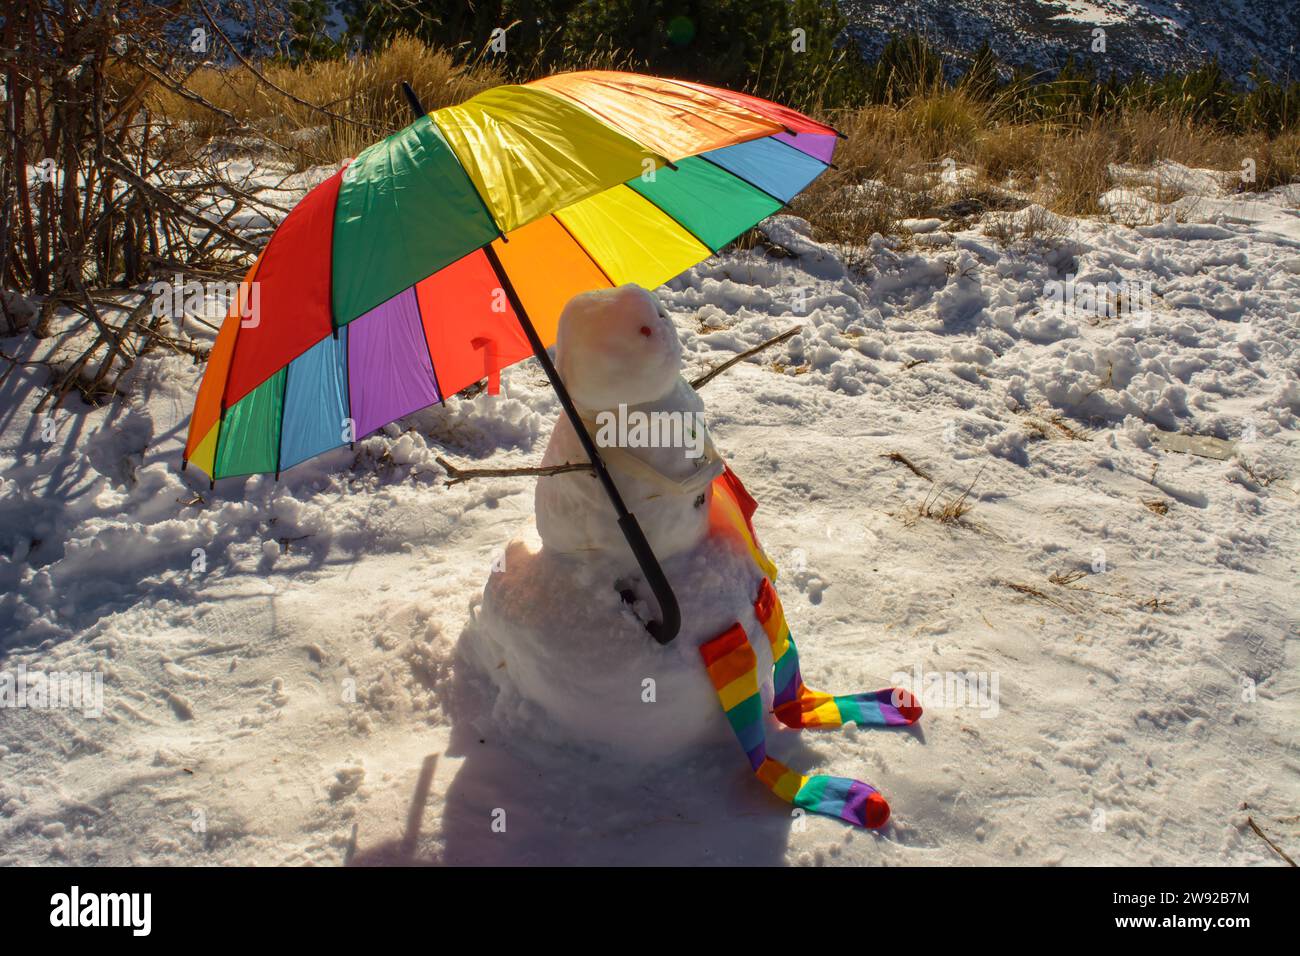 Snowman with umbrella in lgtb pride colors Stock Photo